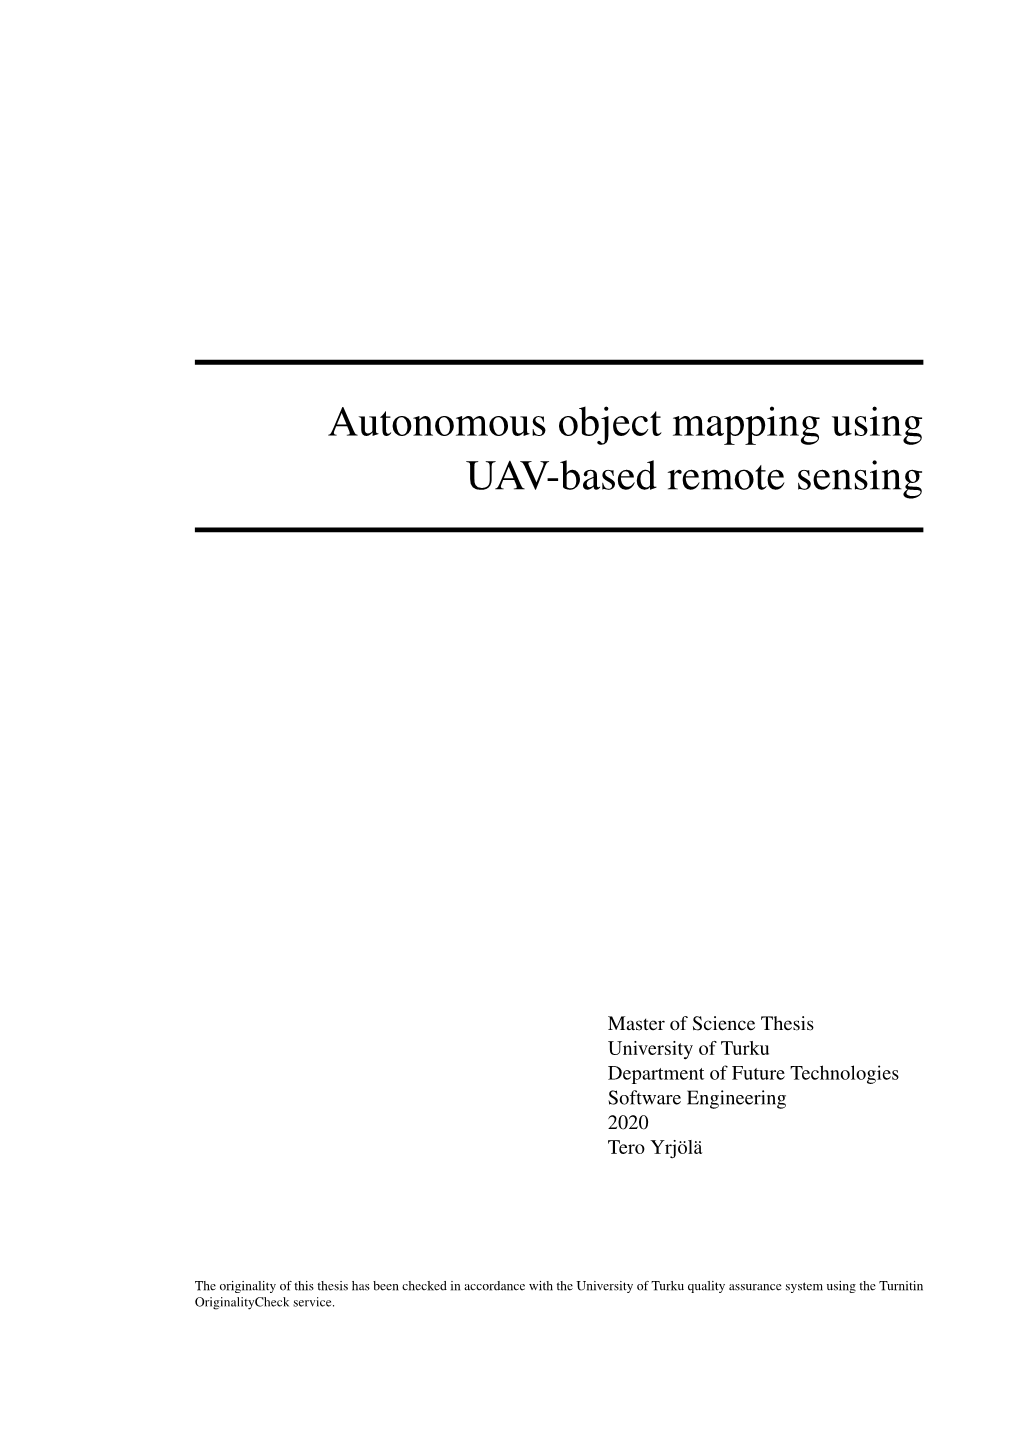 Autonomous Object Mapping Using UAV-Based Remote Sensing